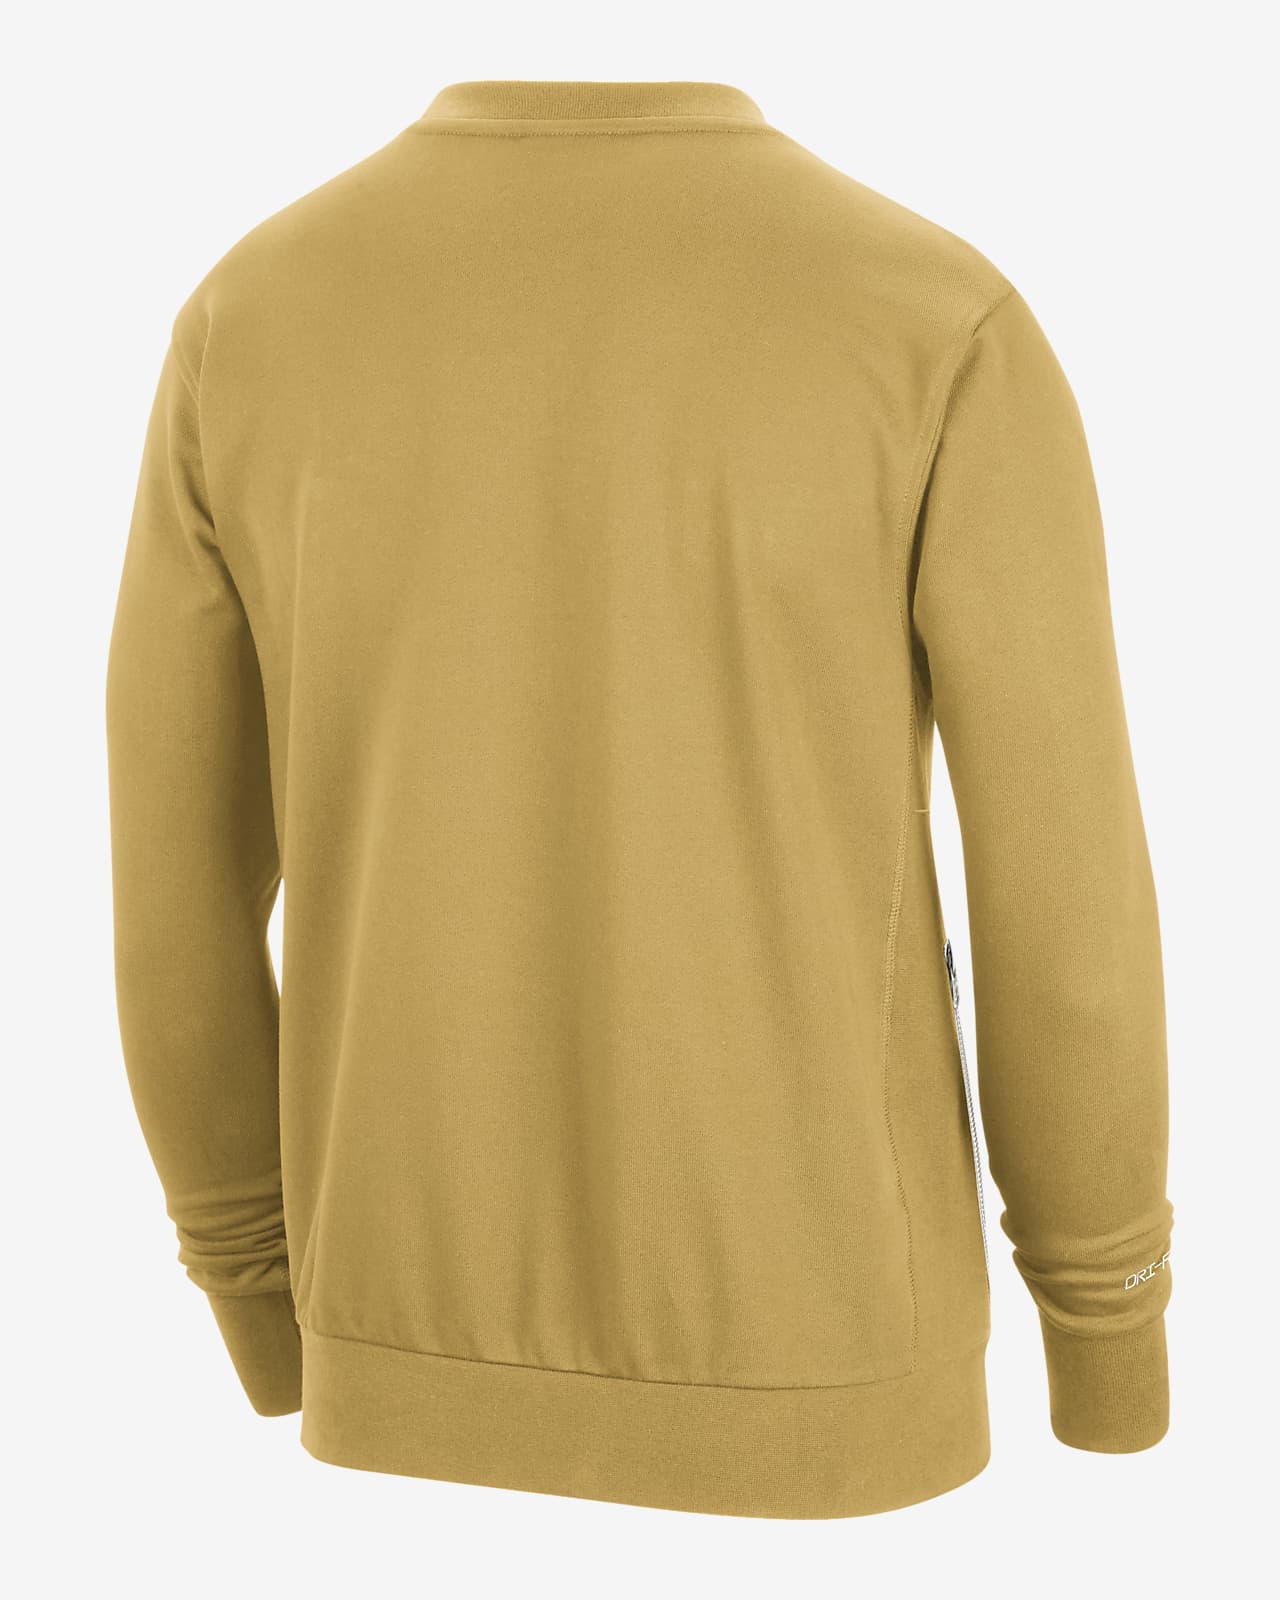 Los Angeles Lakers Standard Issue Men's Nike Dri-FIT NBA Sweatshirt